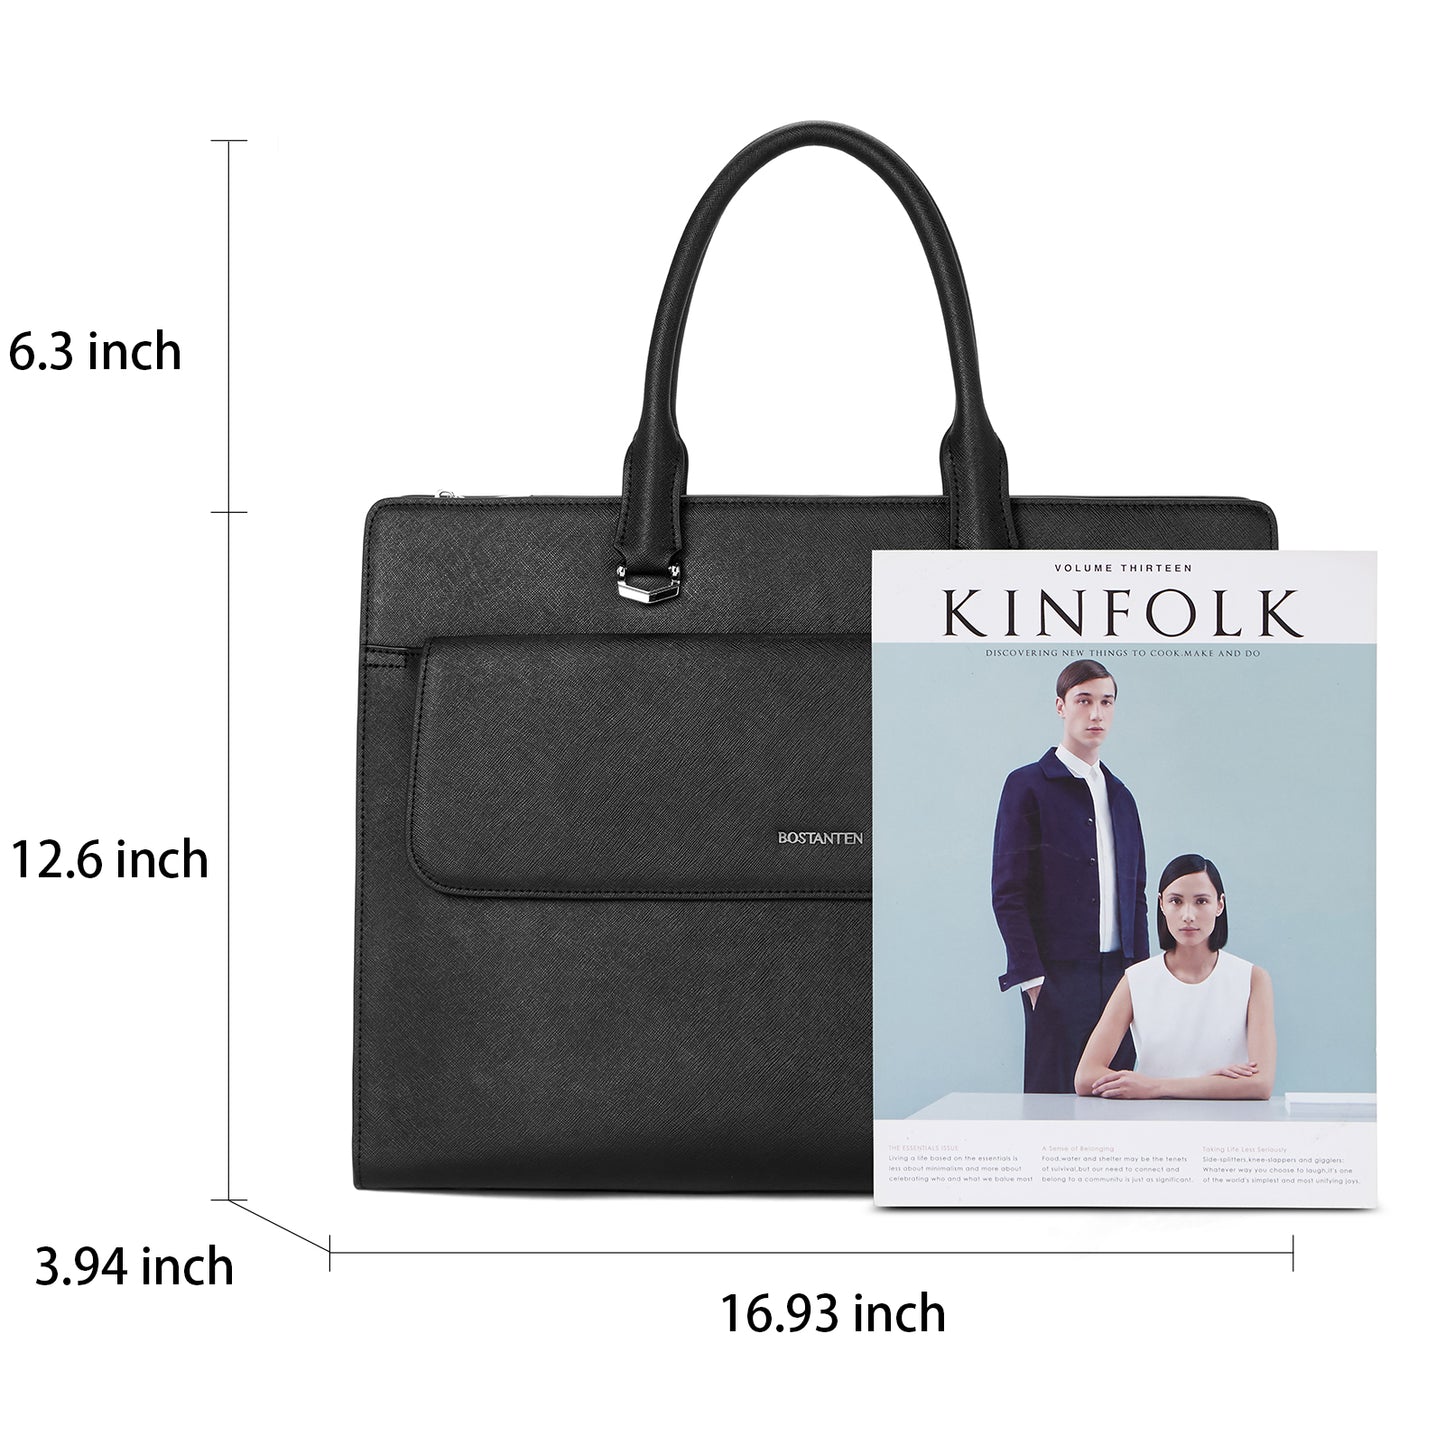 BOSTANTEN Briefcase for Women Leather Laptop Bag 15.6 inch Business Executive Work Bag Messenger Shoulder Bag for Office Lady